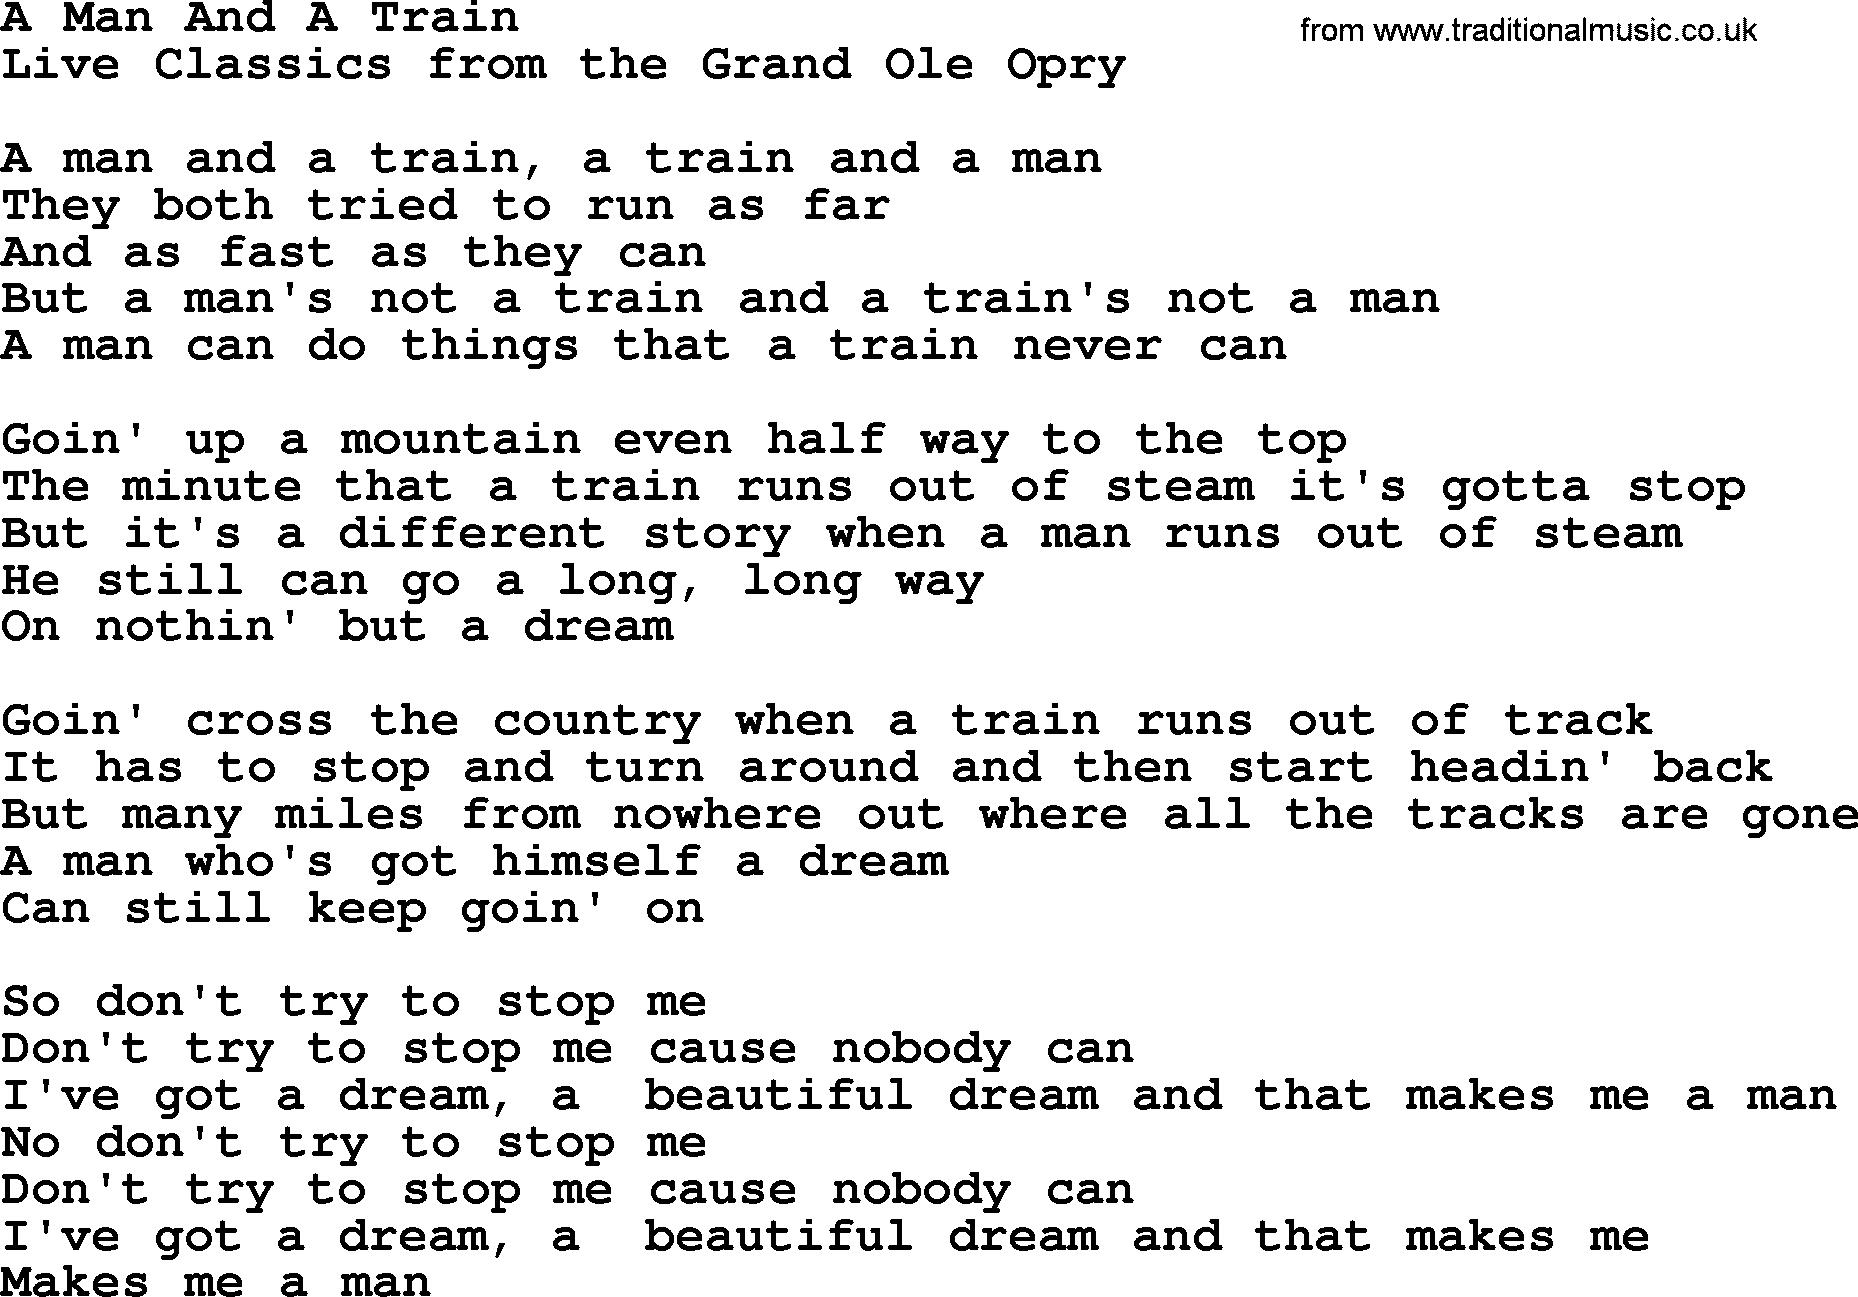 Marty Robbins song: A Man And A Train, lyrics